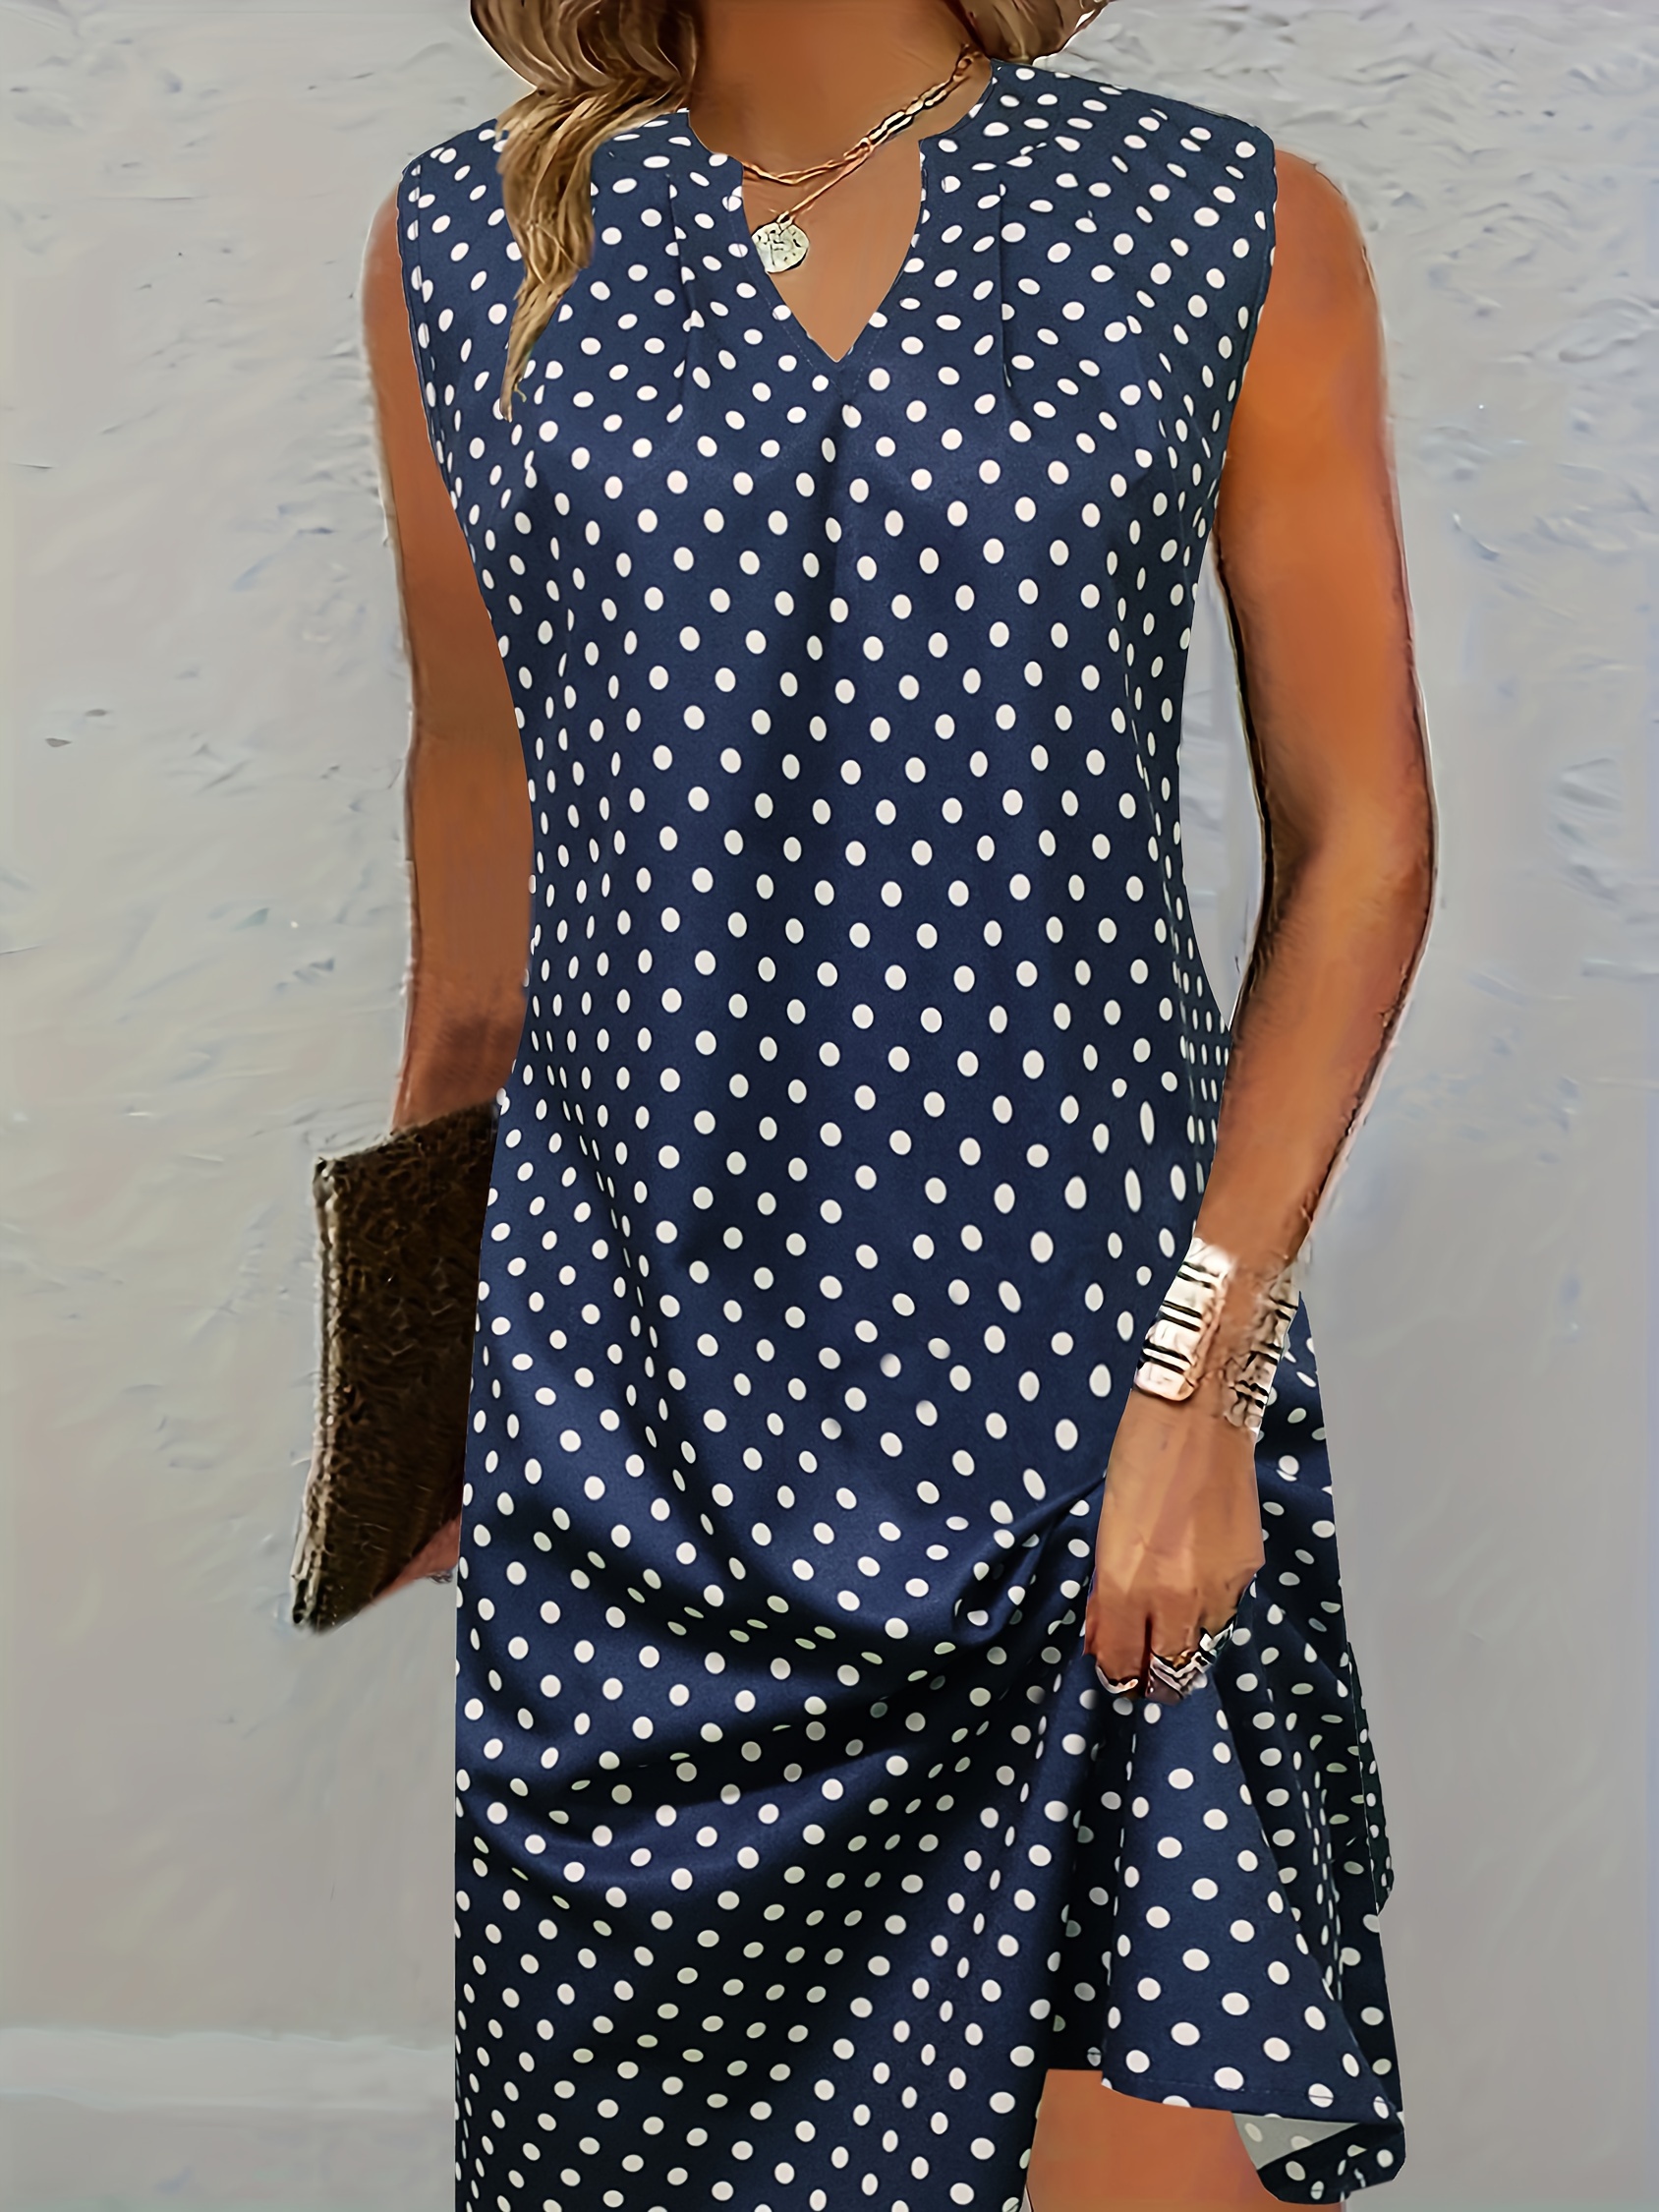 abstract ripple print dress casual v neck sleeveless dress womens clothing details 5